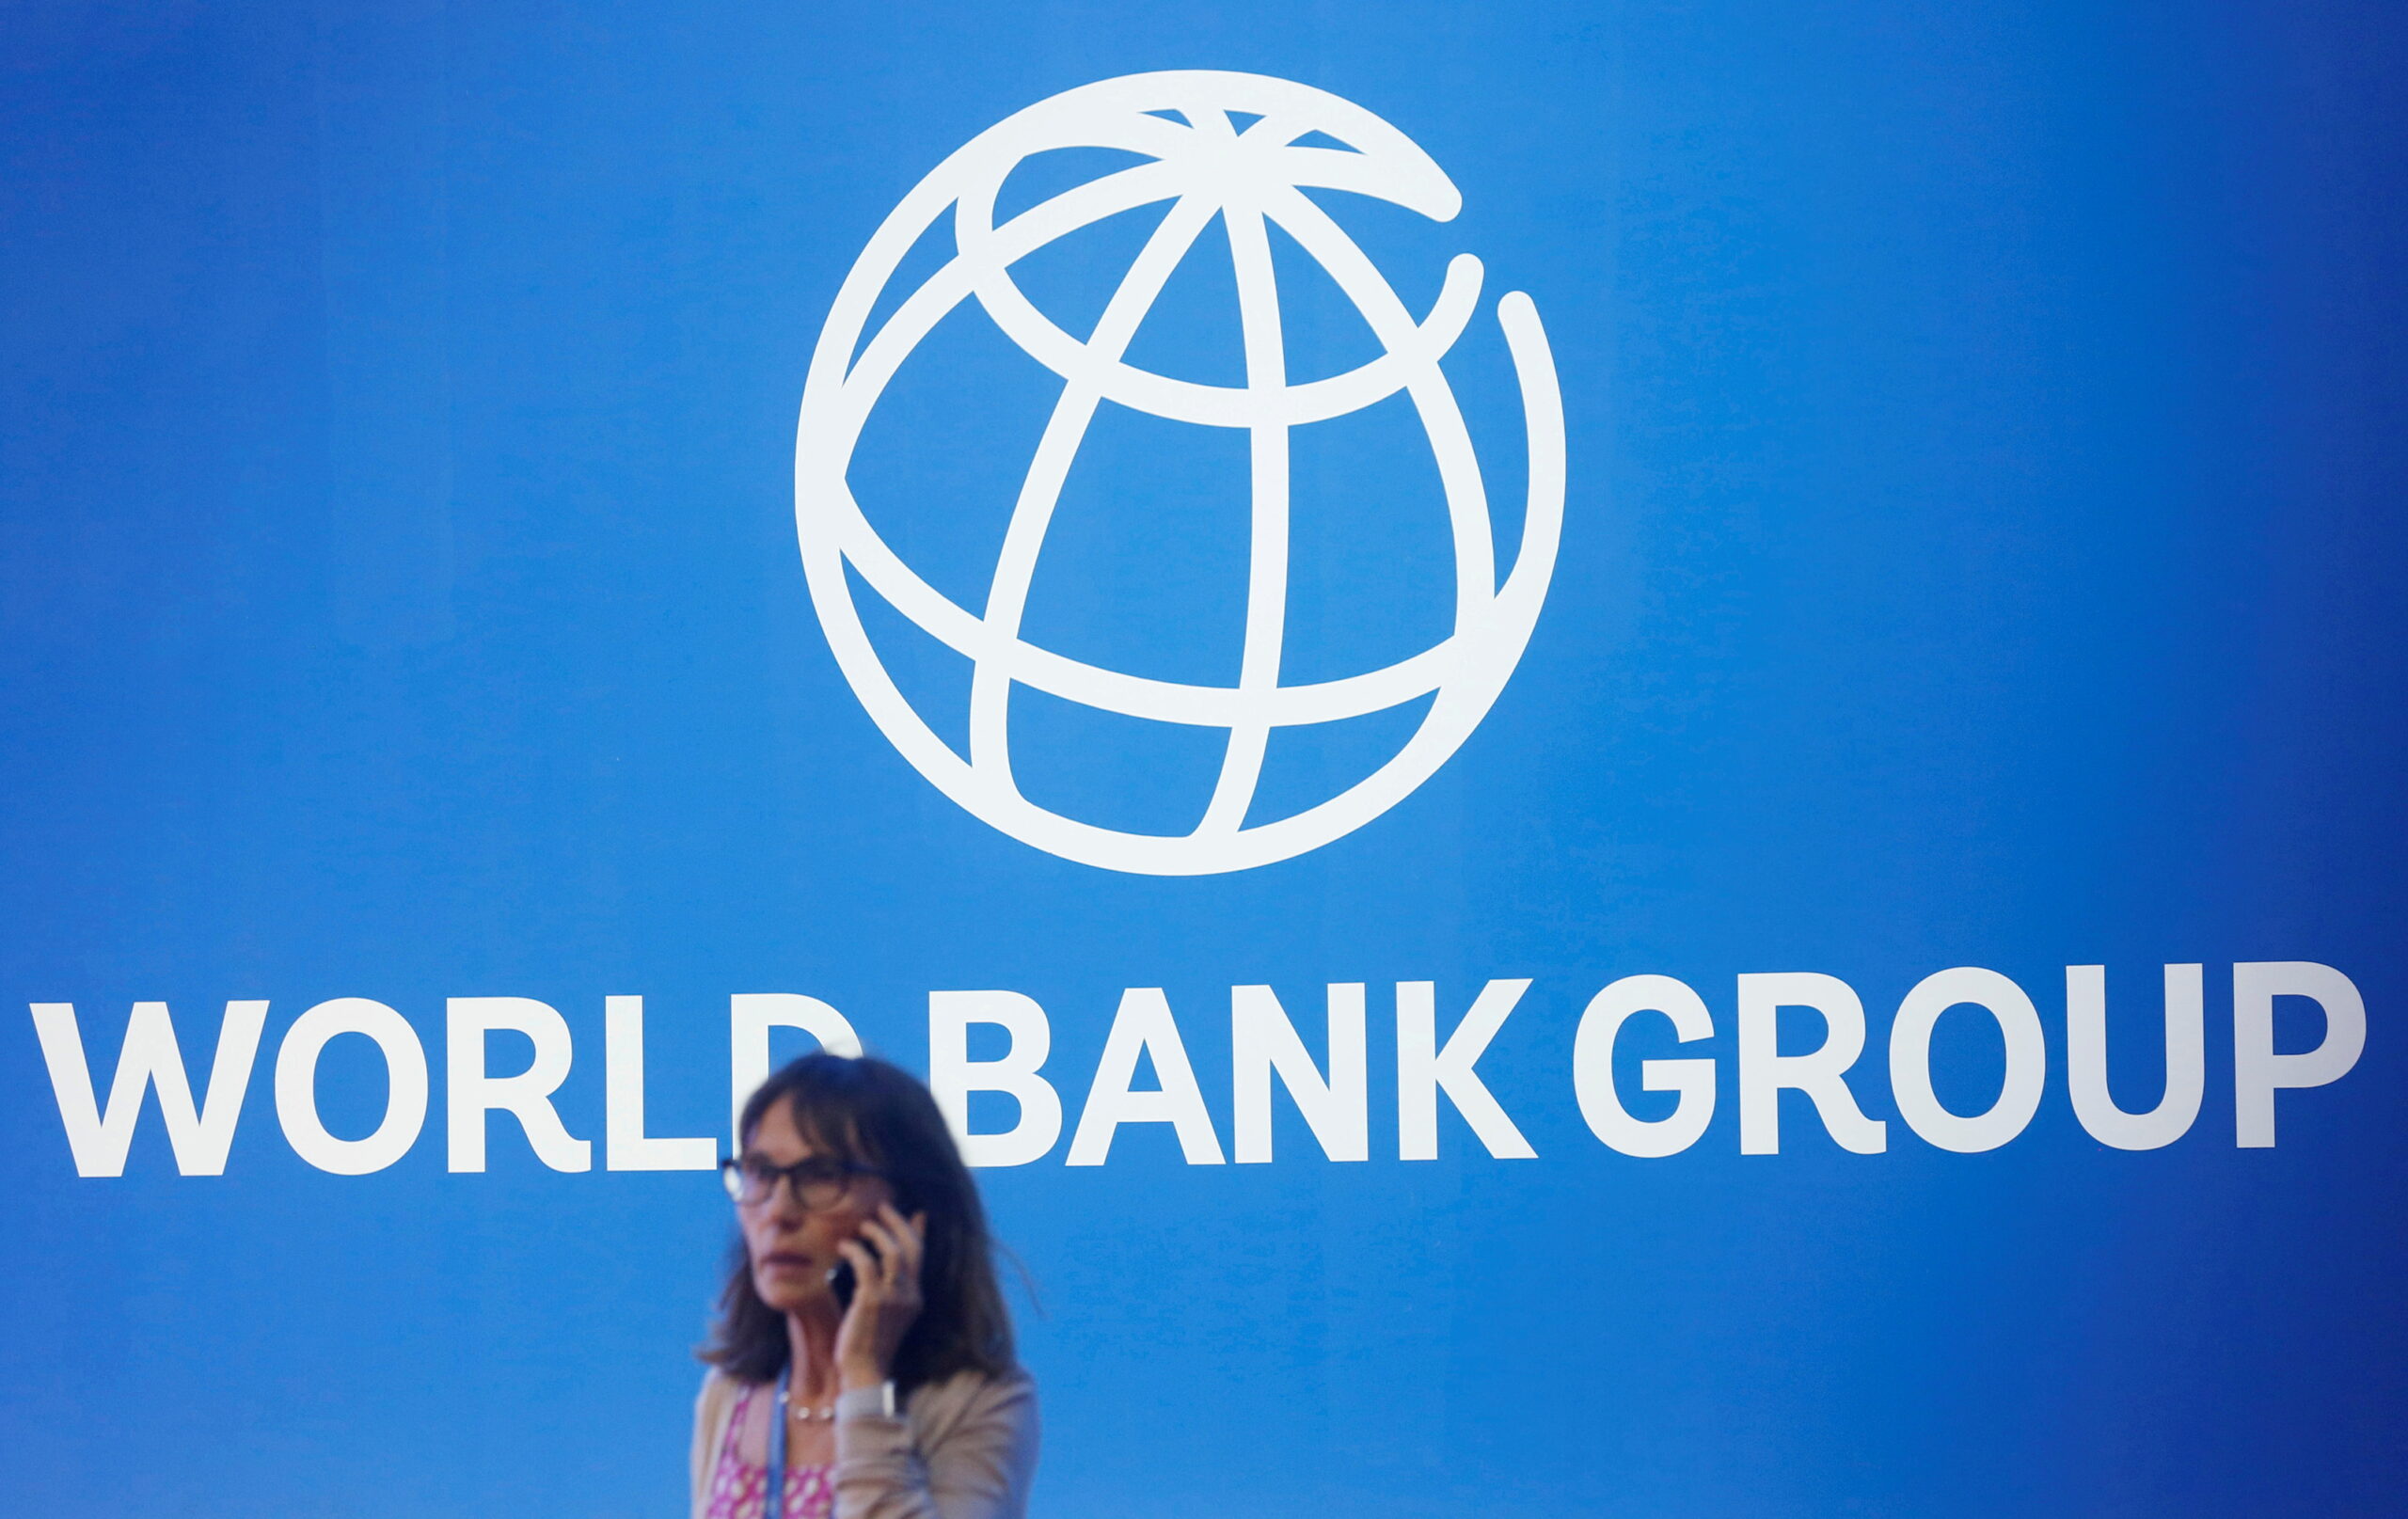 World Bank ยกเลิกรายงานข้อมูลจัดอันดับประเทศ “น่าทำธุรกิจ” มากที่สุด – ต่างประเทศ